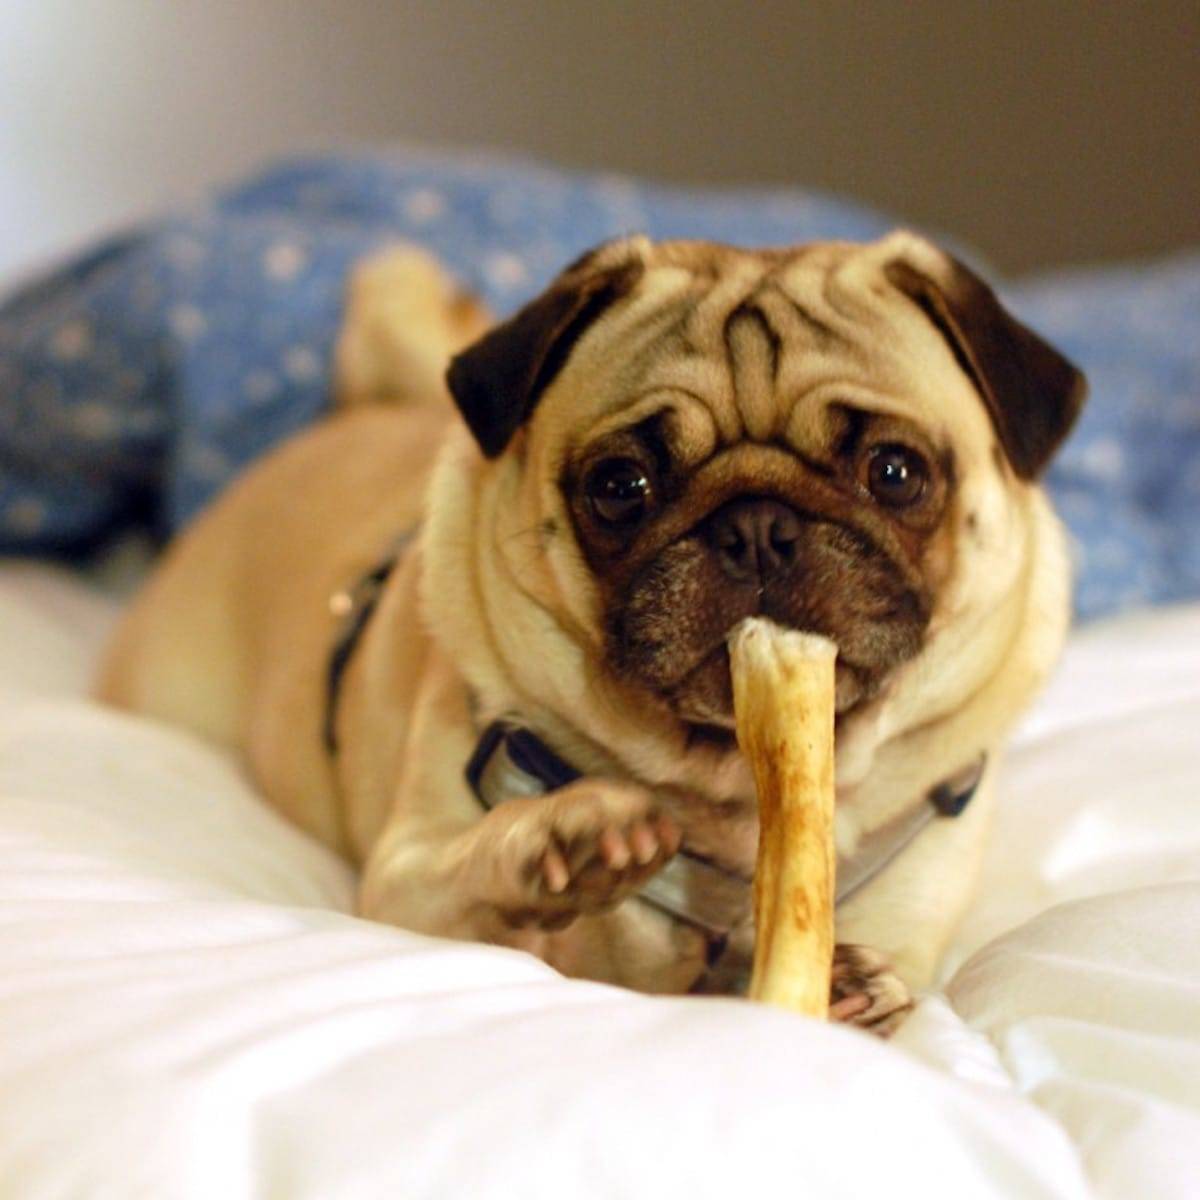 Pug chewing on a bone.